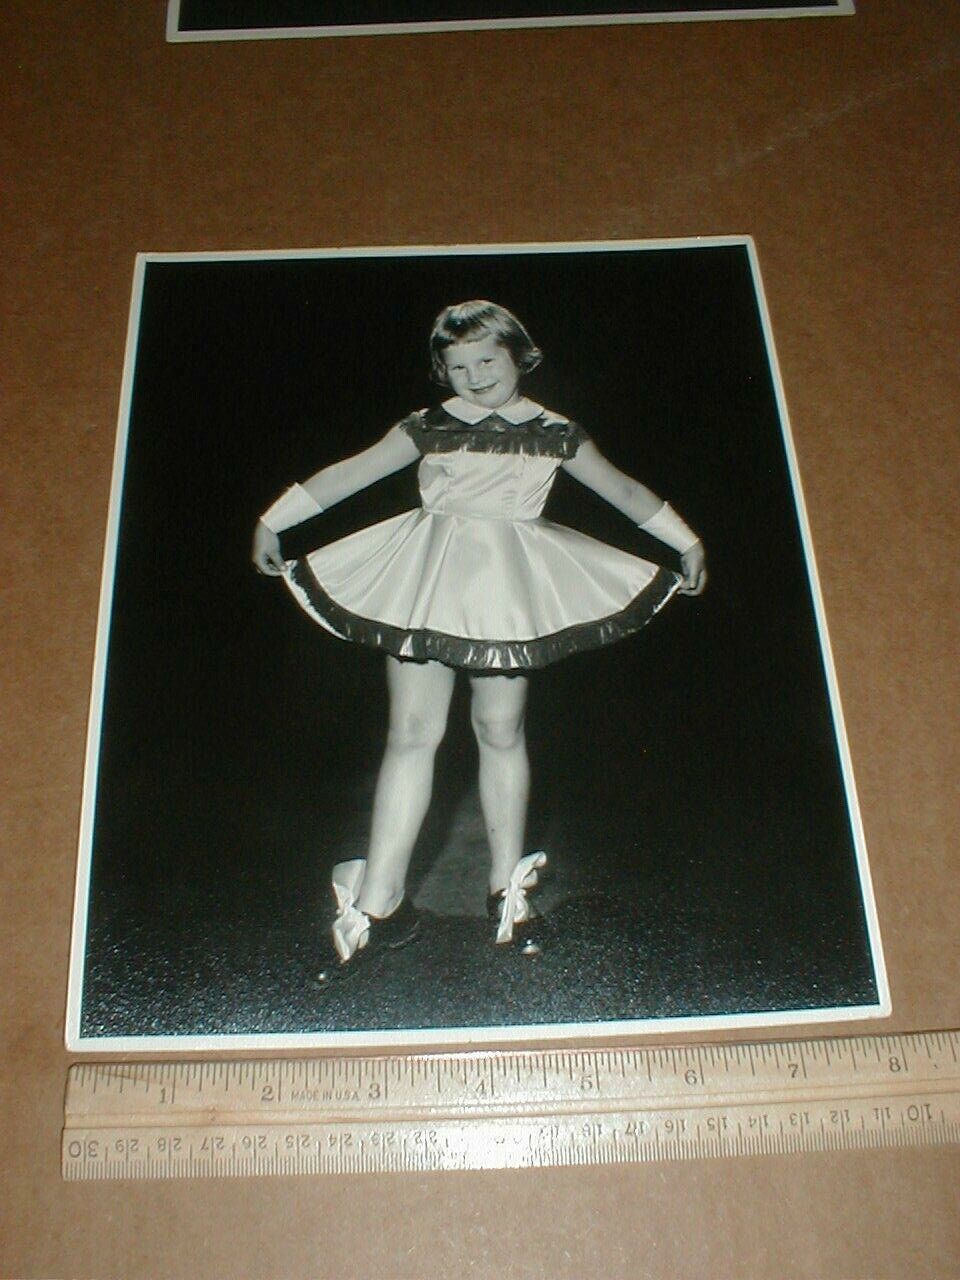 VTG 1958-1959 Children Ballerina Dancer Greensboro NC Photo Original Photo Lot Без бренда - фотография #2